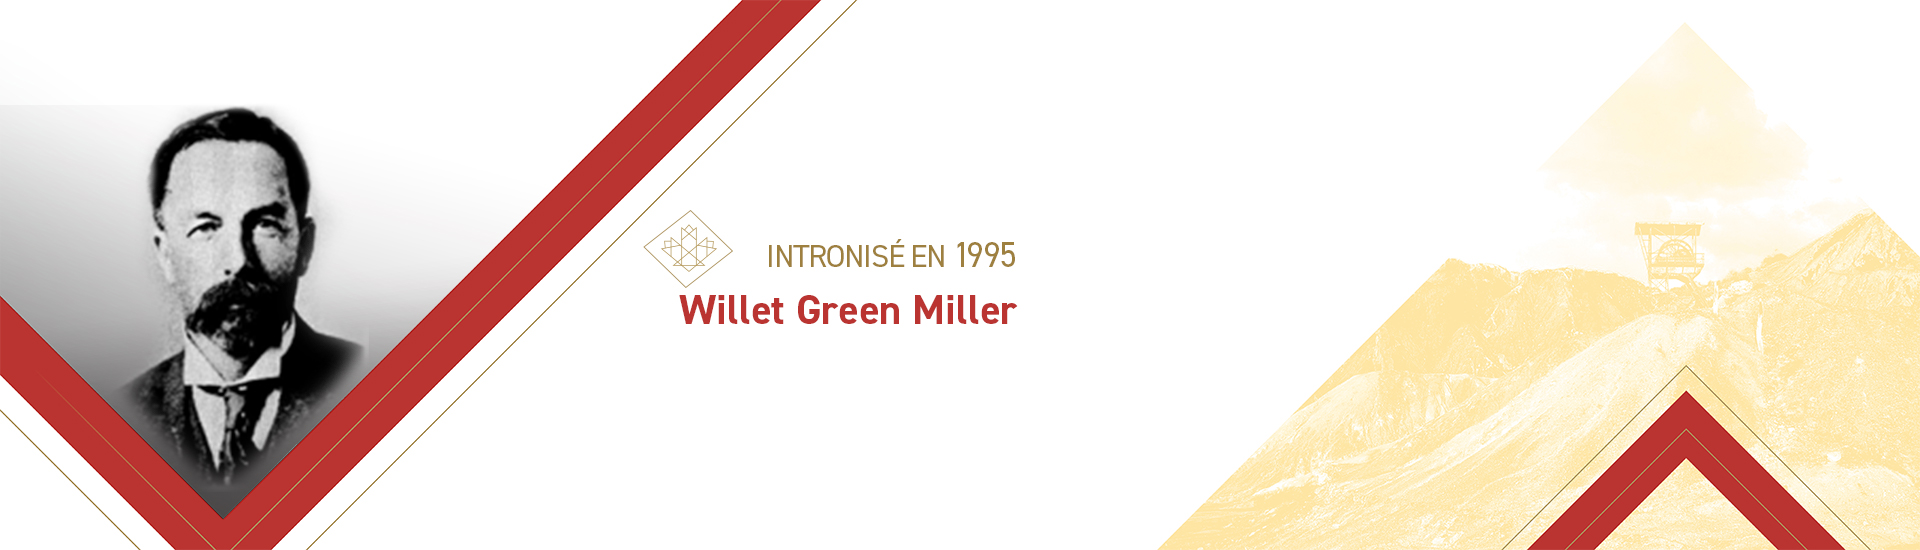 Willet Green Miller (1866-1925)